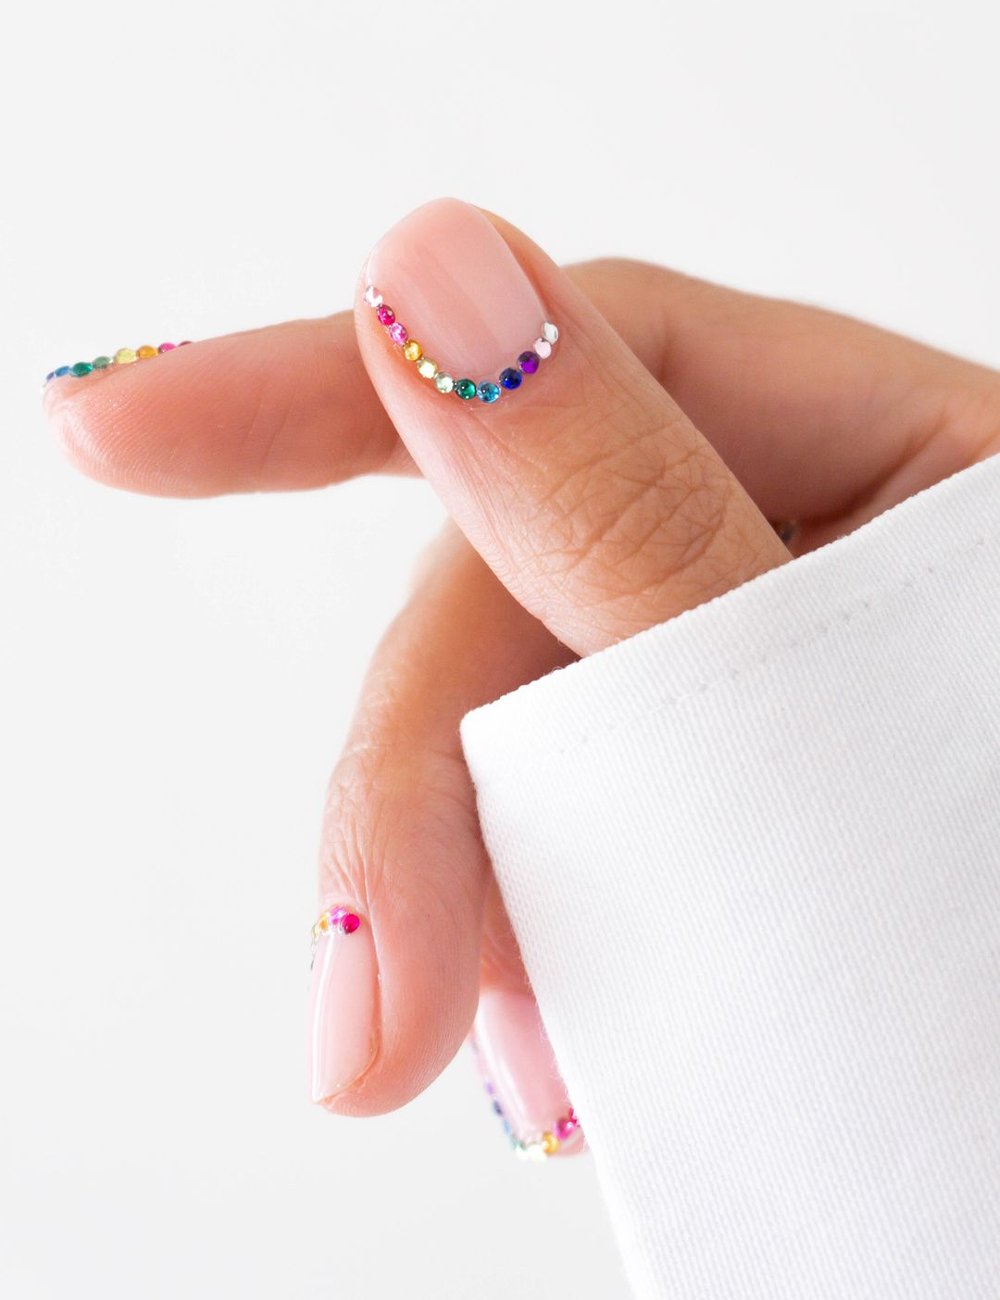 Andréa Barbet - nail arts - nail arts - nail arts - nail arts - https://stealthelook.com.br